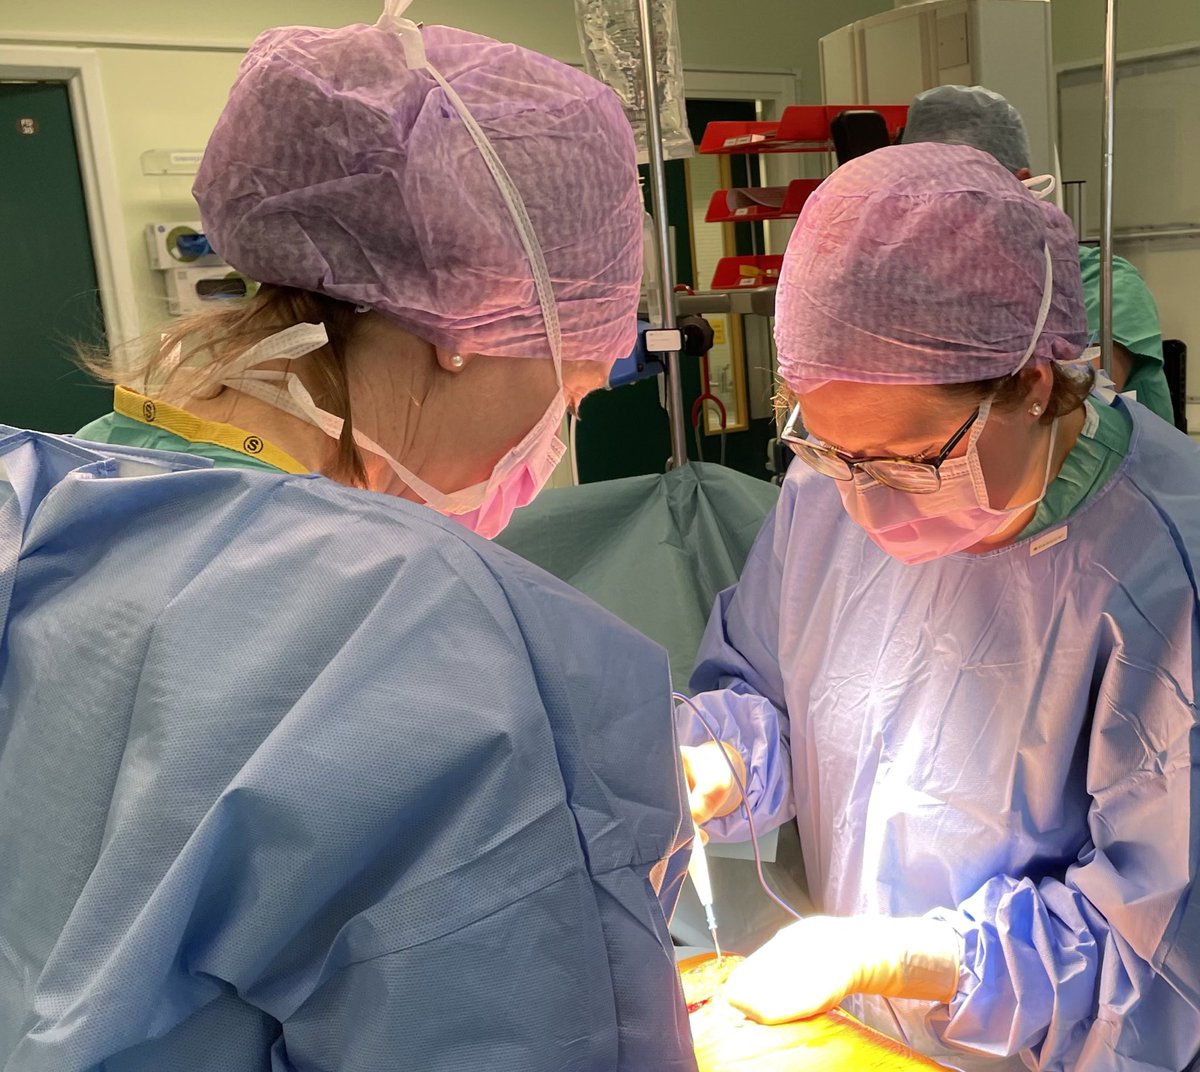 Flawless open aneurysm repair by two of our team @ROForsythe @oliviamcbride02 @RCSEd @EdinSurg @EdinUniMedicine @RouleauxClub #WomenInSurgery #WomenPhysiciansDay #WomenInVascularSurgery